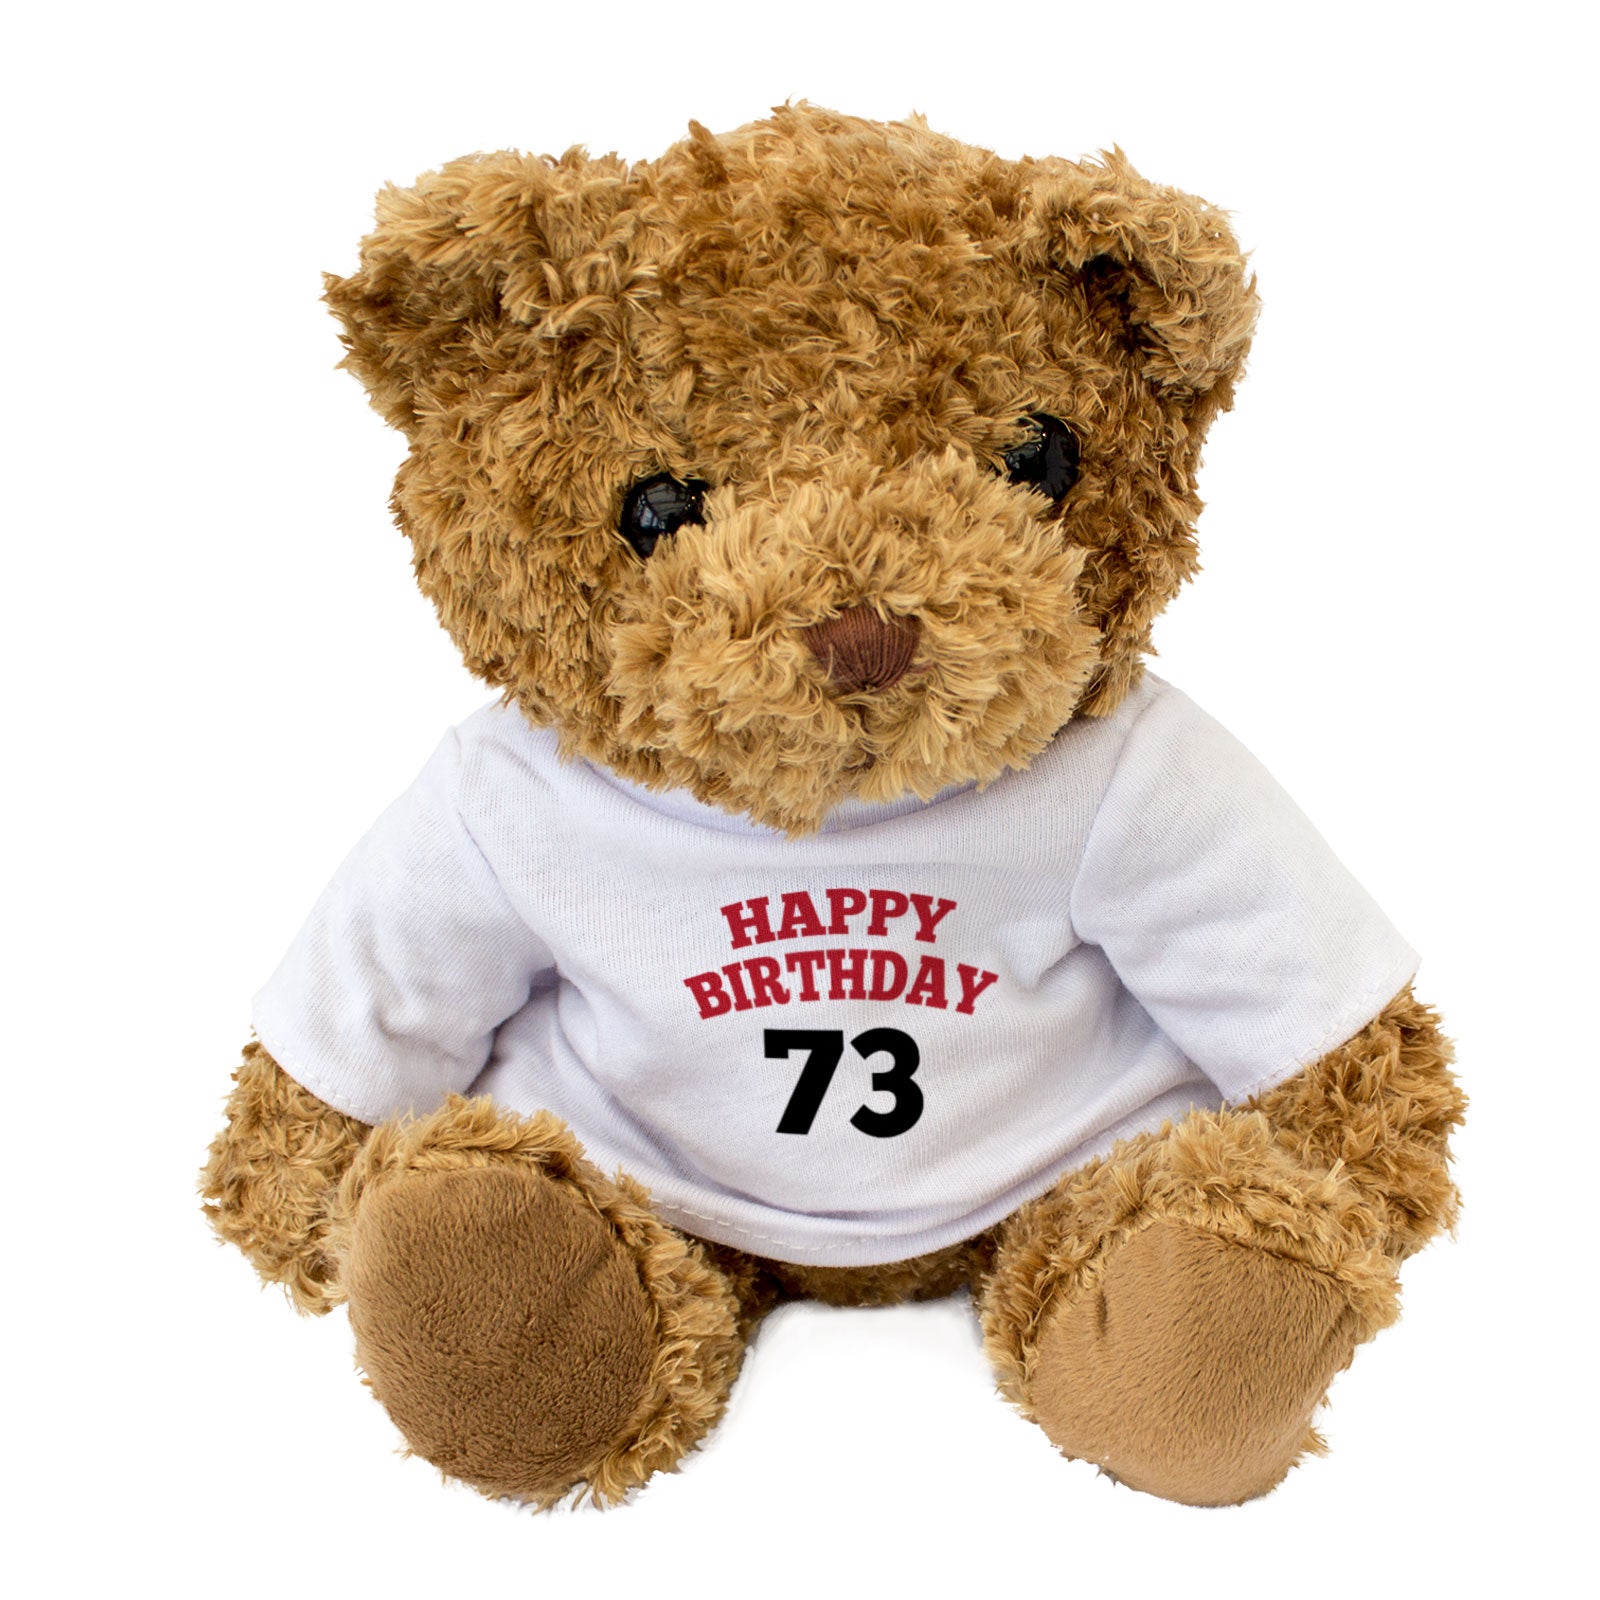 Happy Birthday 73 - Teddy Bear